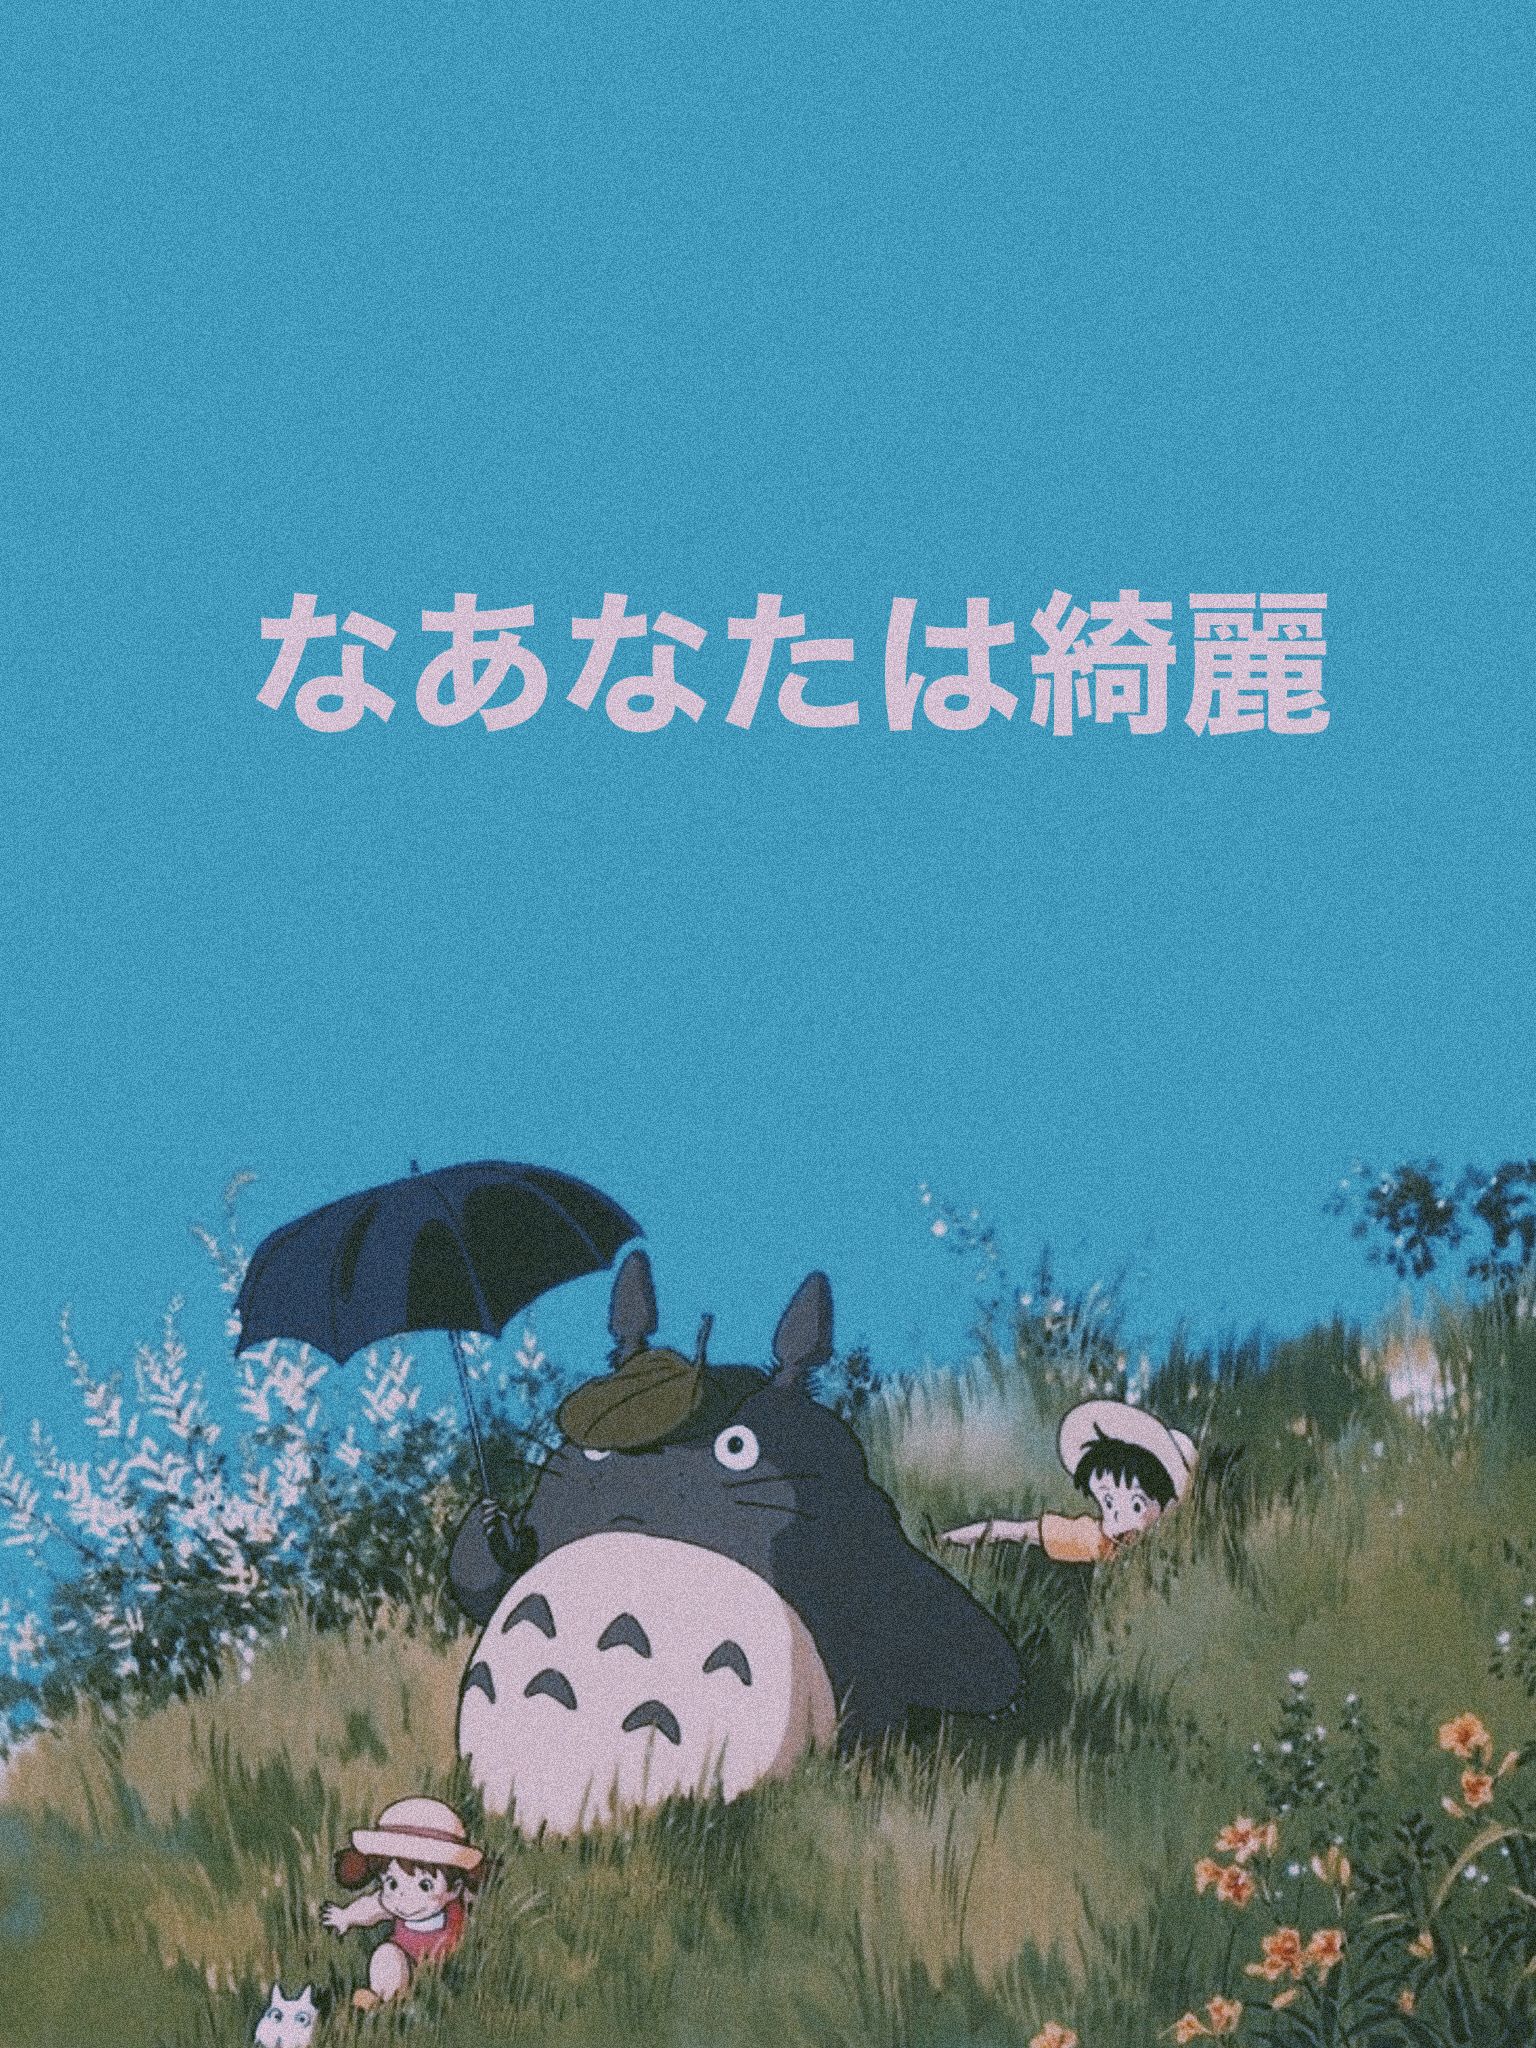 Totoro anime wallpaper iPad aesthetic. iPad wallpaper, Aesthetic anime, Anime wallpaper